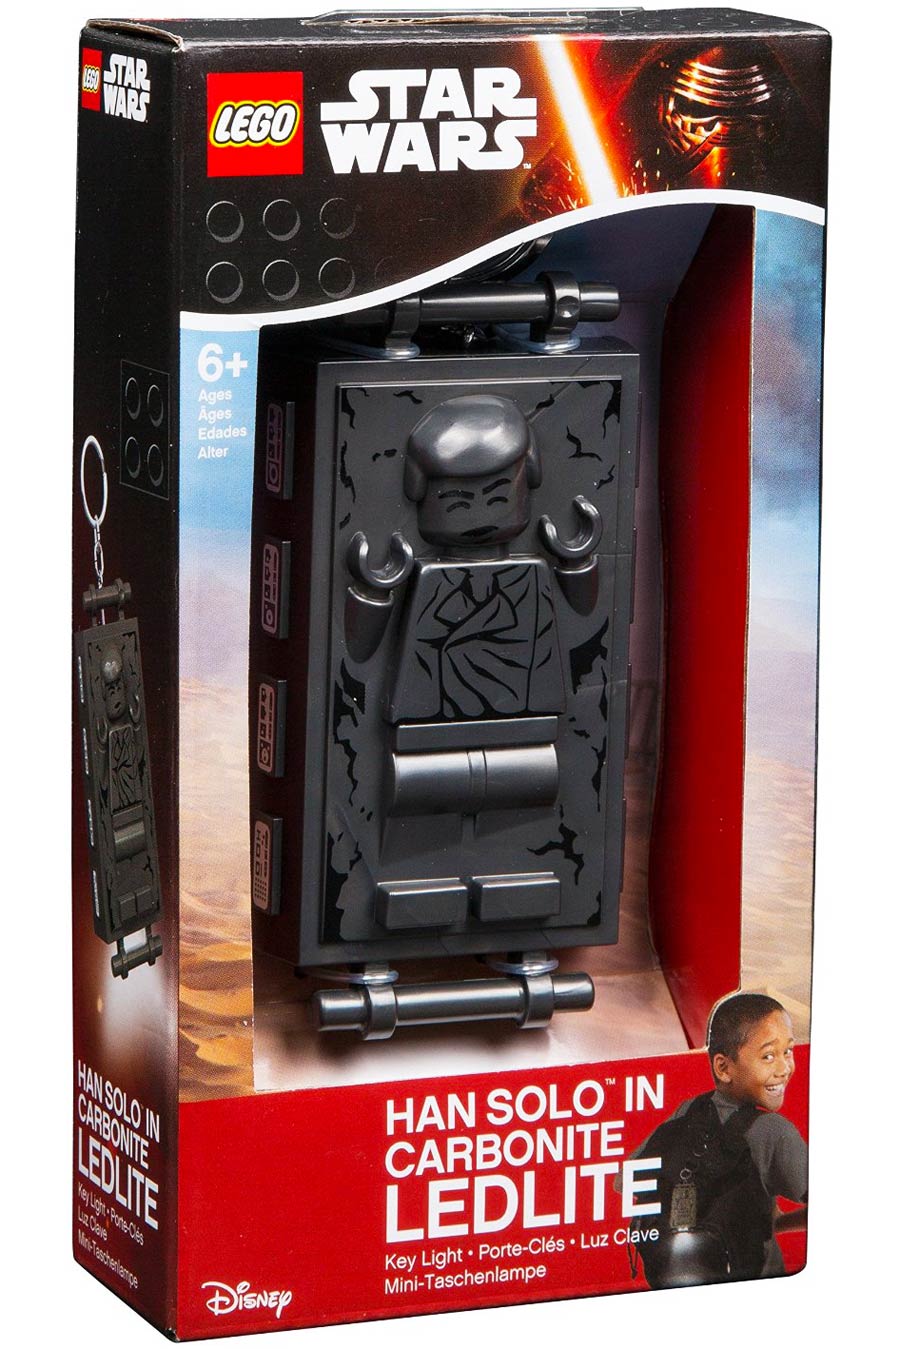 Star Wars LED Key Light - LEGO Han Solo Carbonite